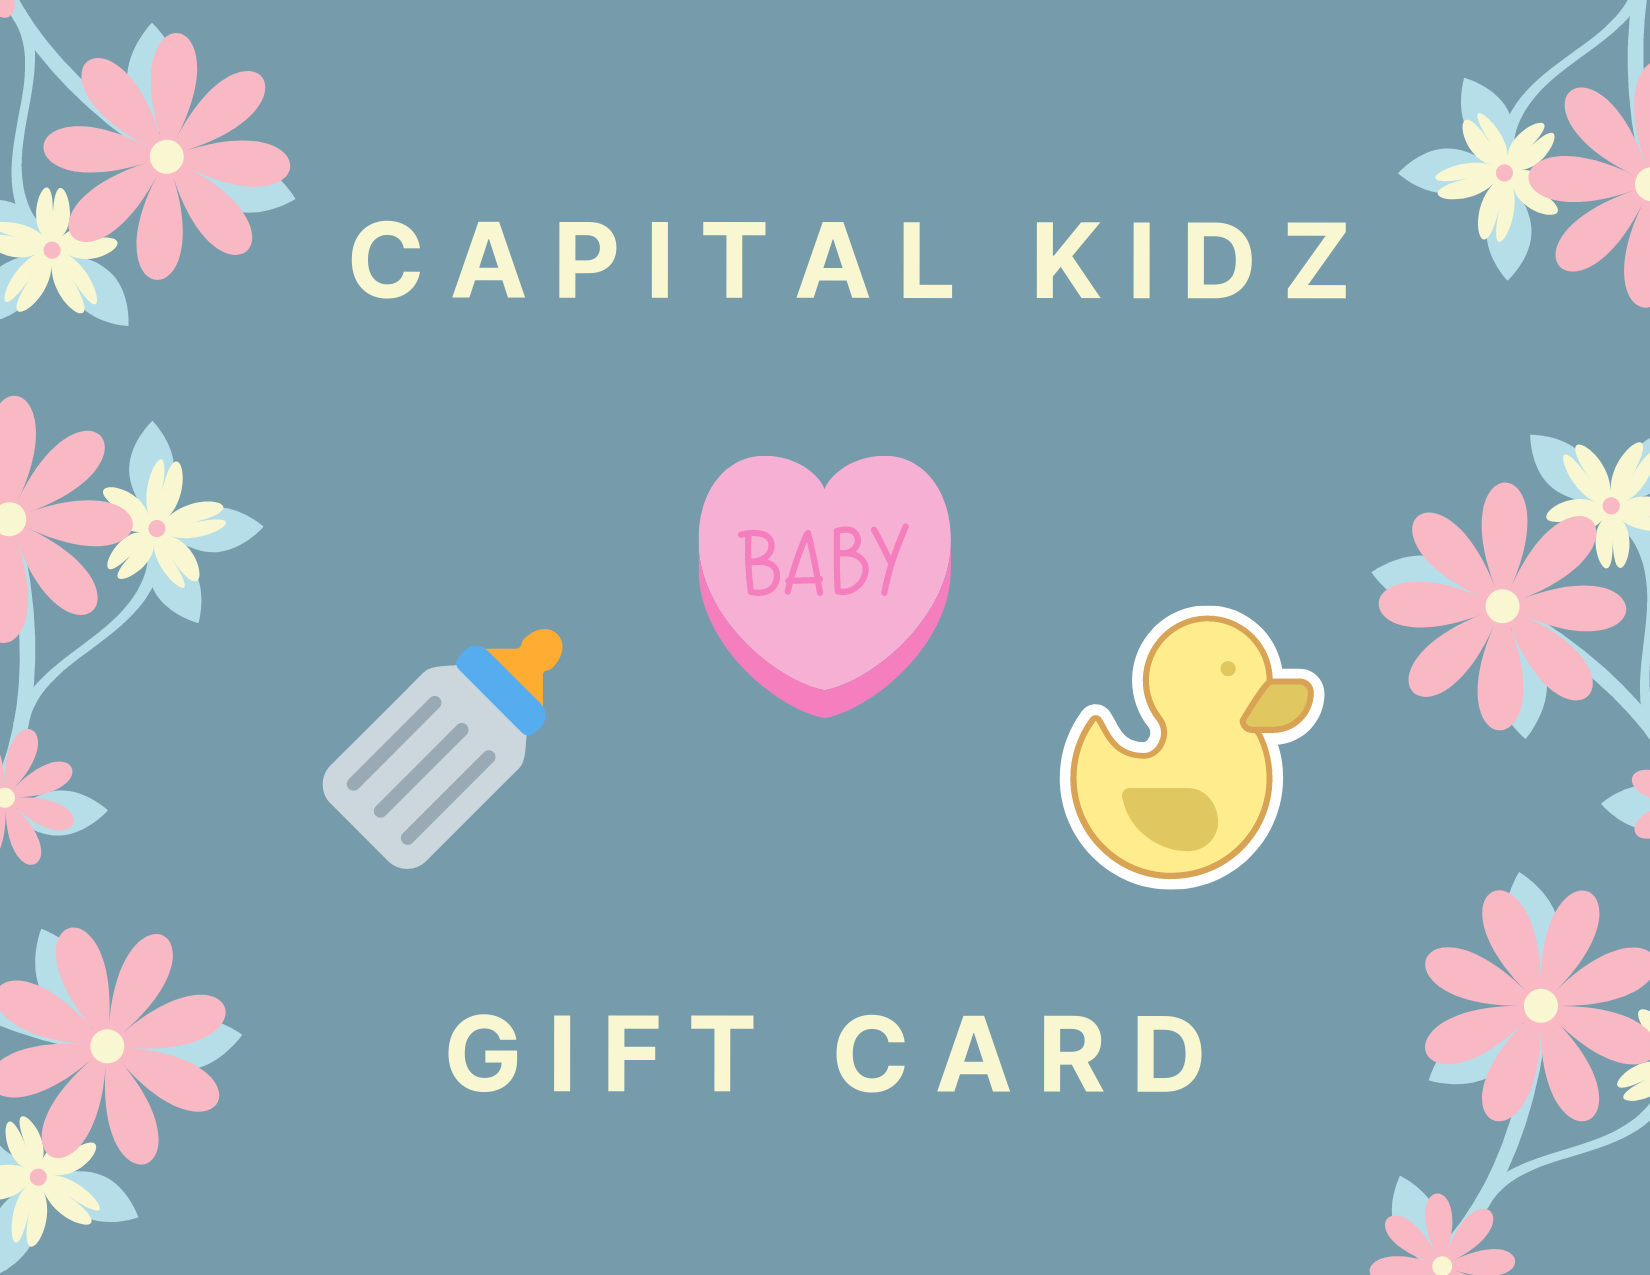 Capitalkidz Gift Card